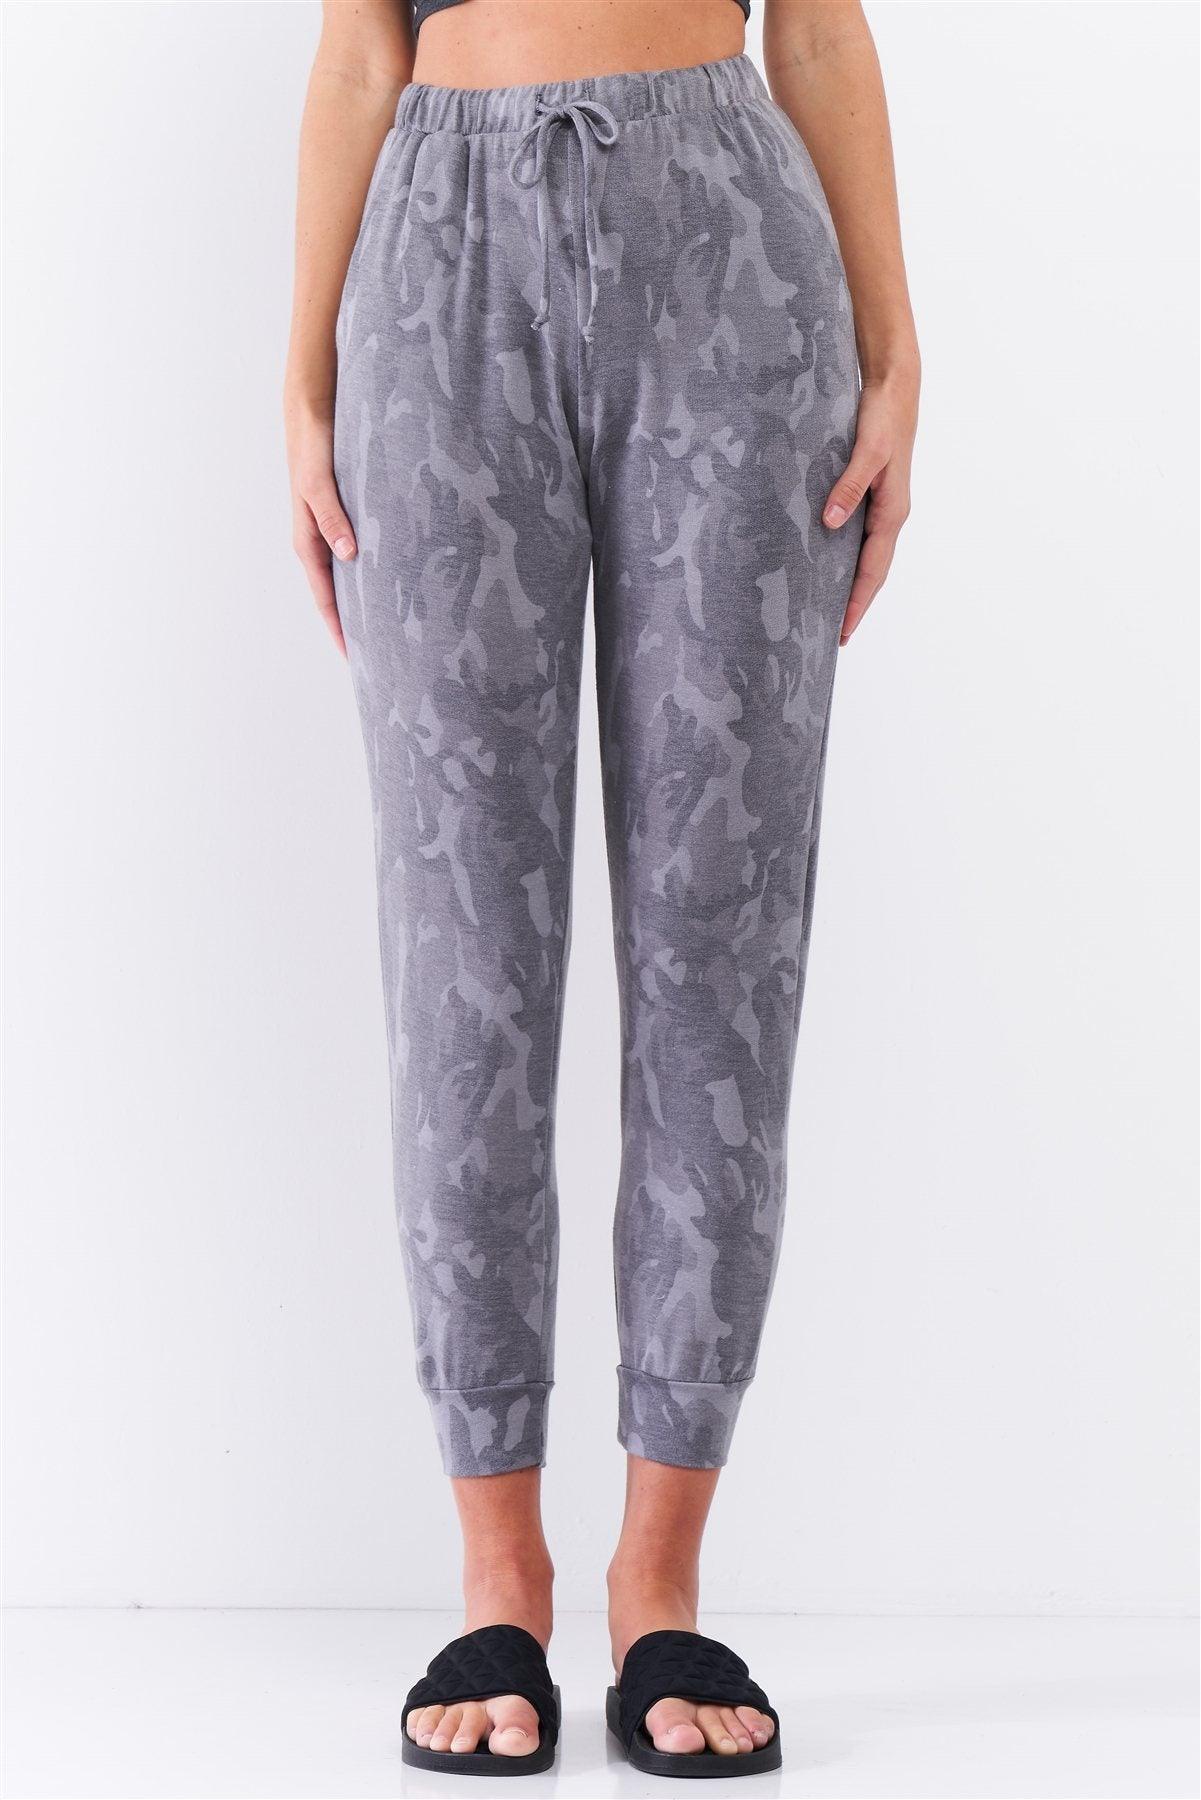 Grey Camo Print Loose Fit High-waisted Elasticated Self-tie Drawstring Waistline Track Pants